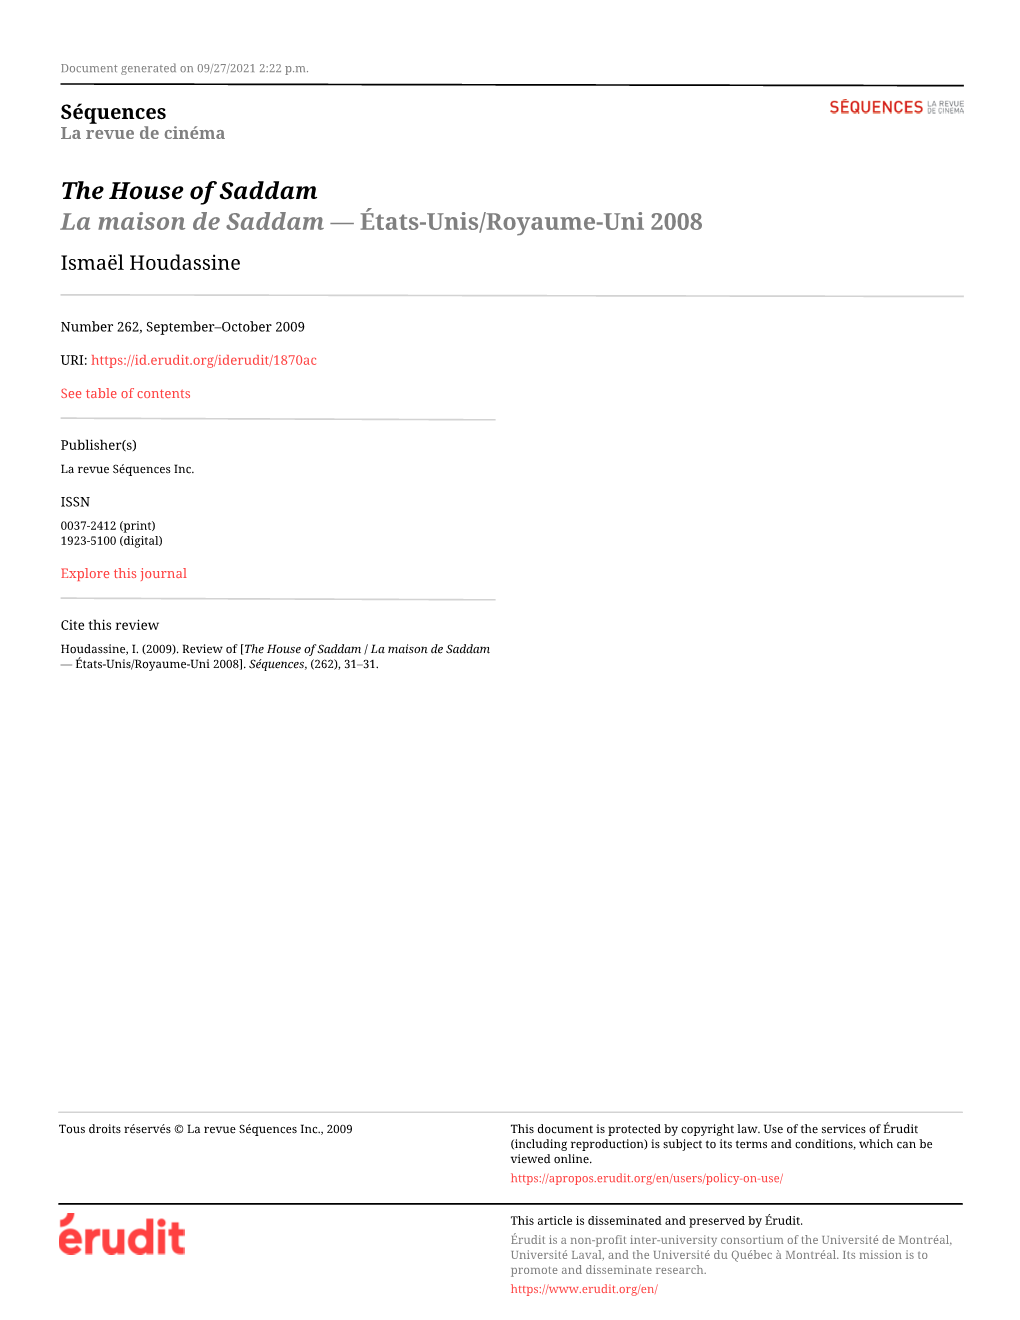 The House of Saddam / La Maison De Saddam — États-Unis/Royaume-Uni 2008]